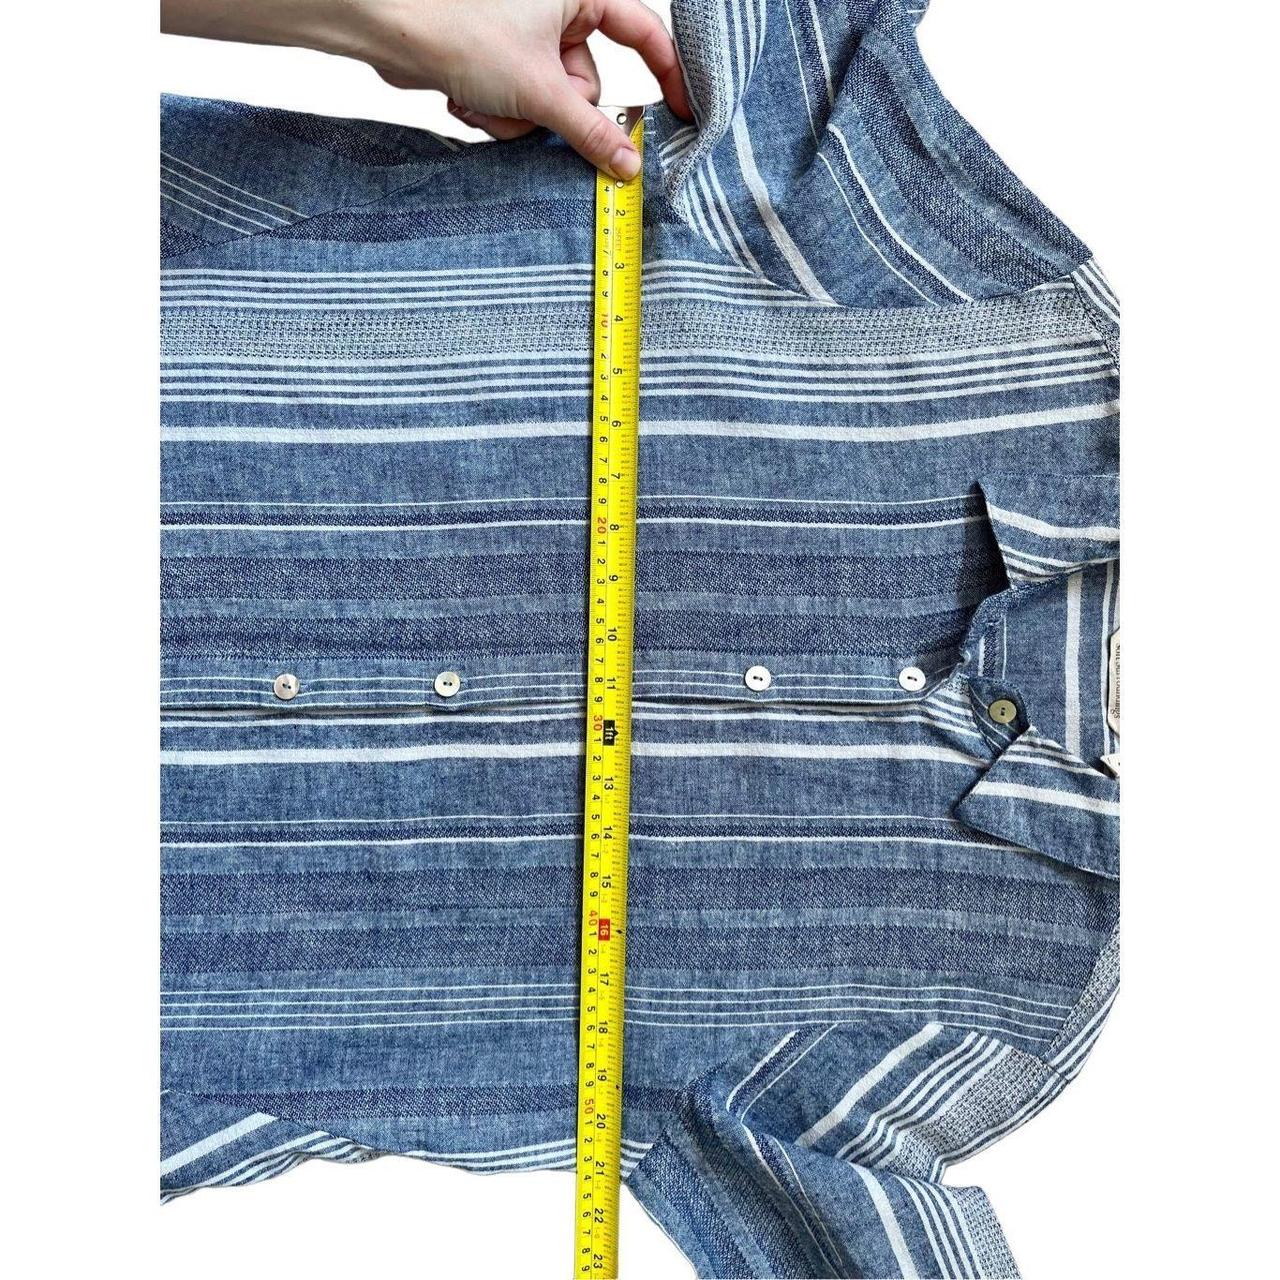 Soft Surroundings Chambray Denim Button Front Shirt Dress - X-Small. Casual  | eBay